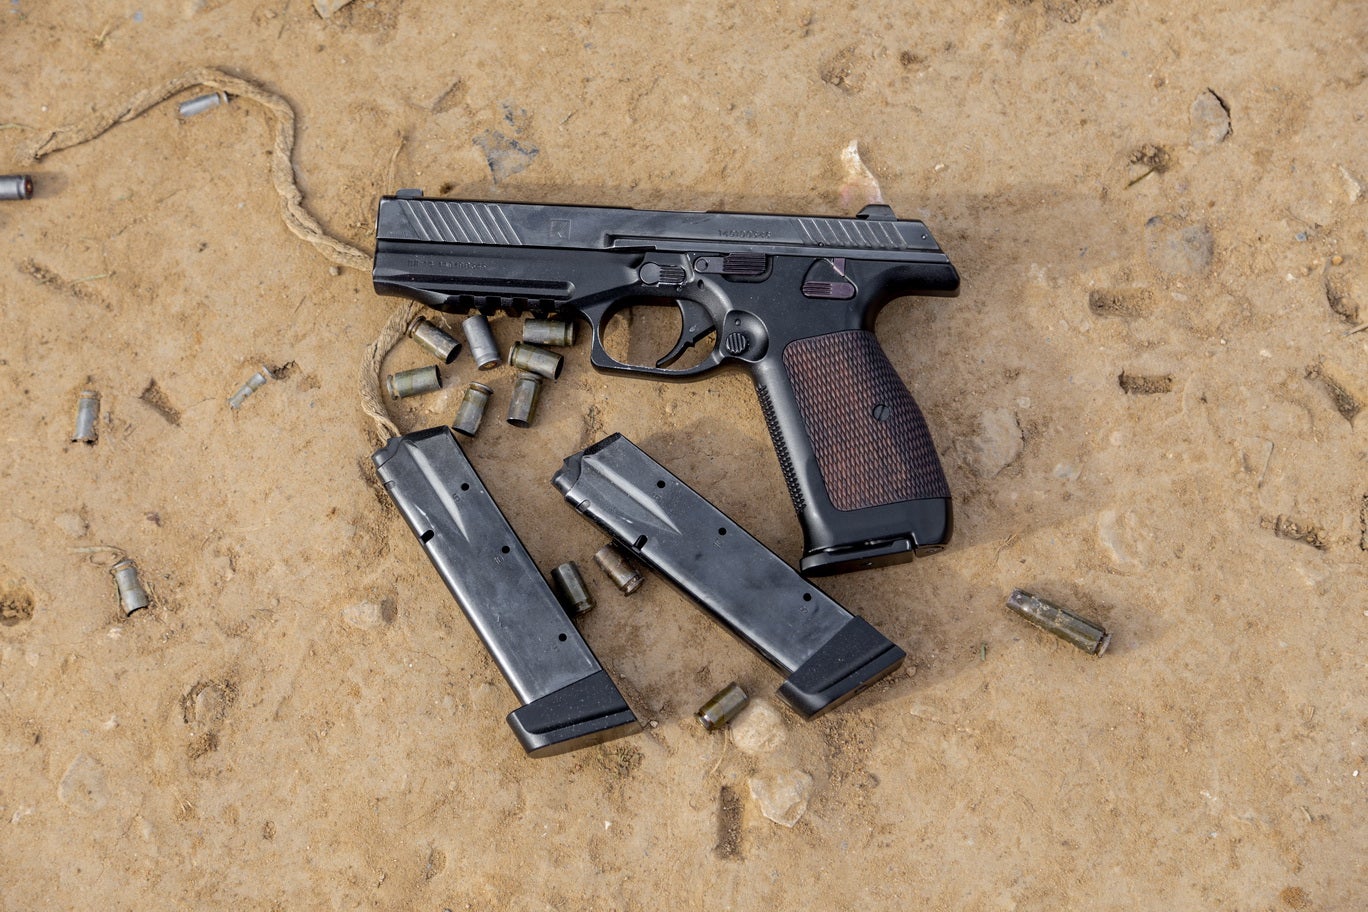 All prototypes of PL pistol used CZ mags. Photo courtesy of Konstantin Lazarev: https://www.facebook.com/konstantin.lazarev.1982